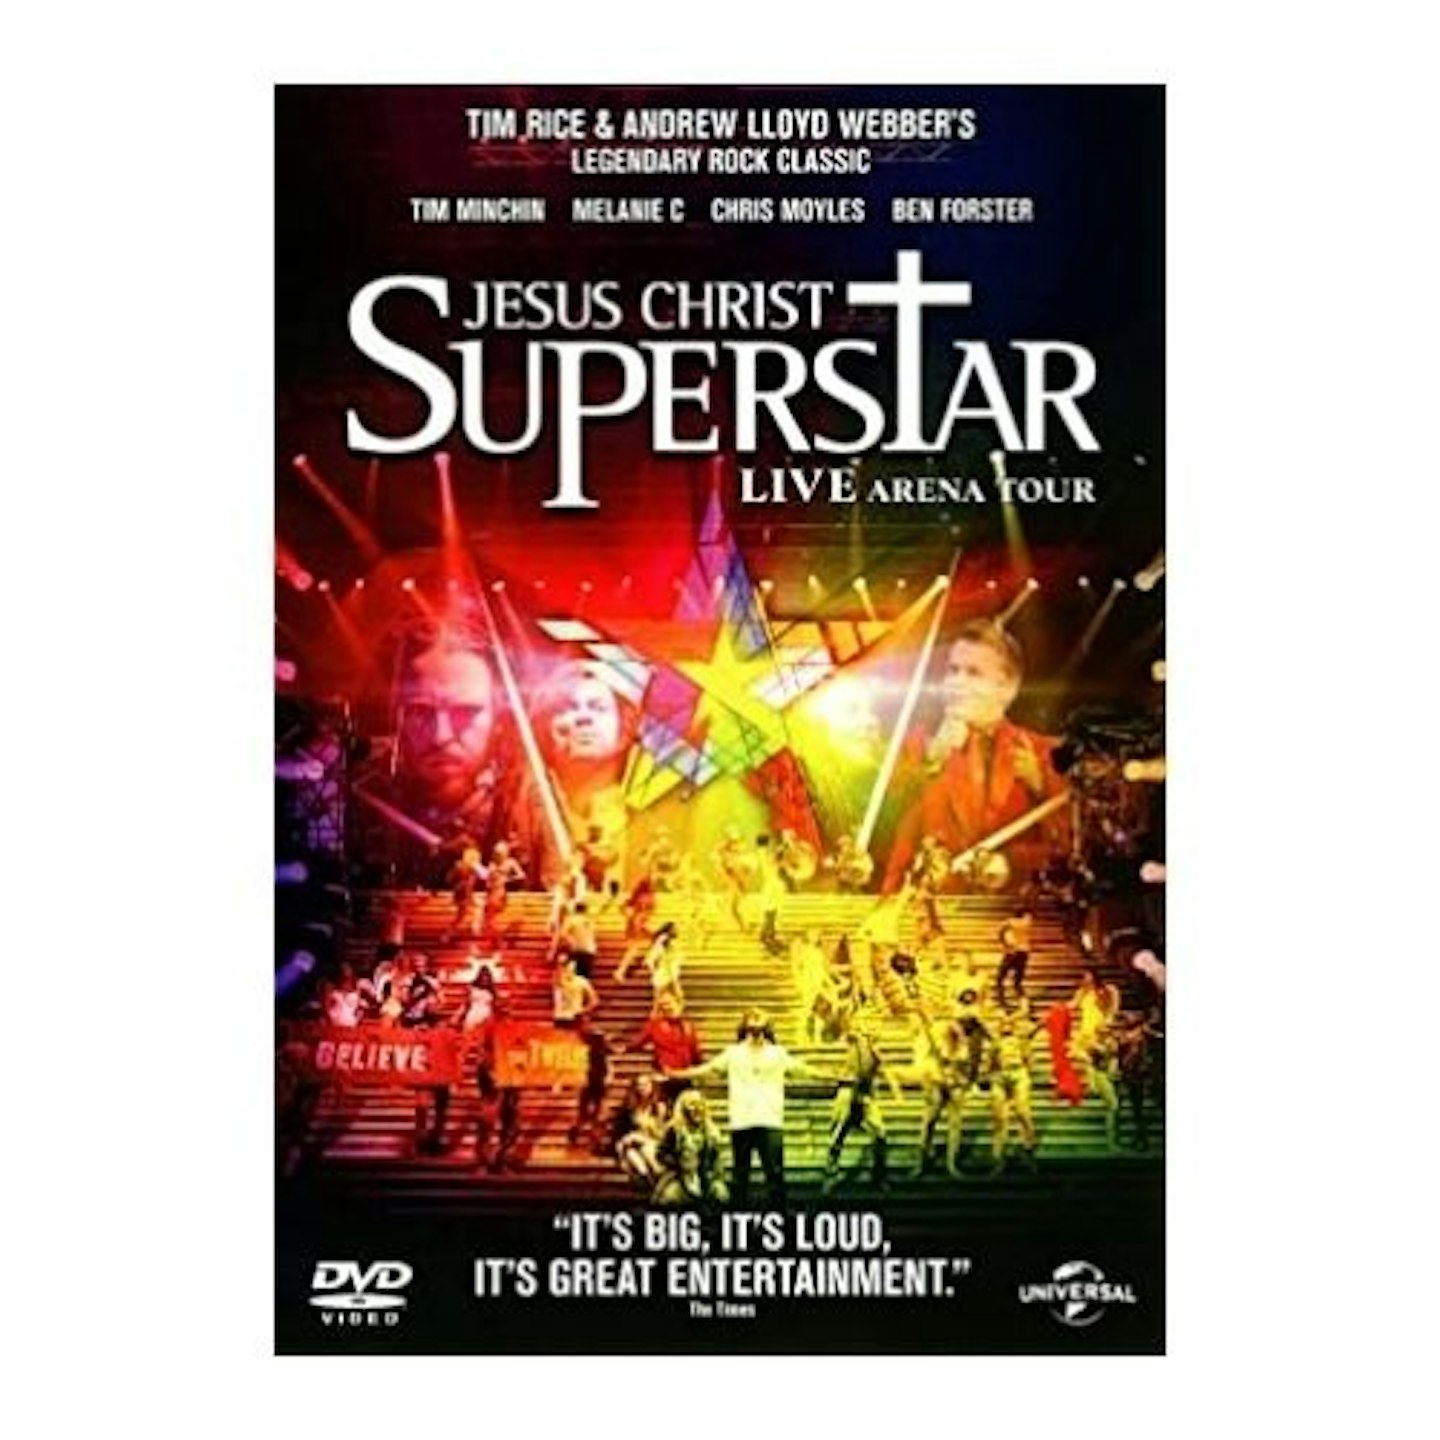 Jesus Christ Superstar: Live Arena Tour DVD